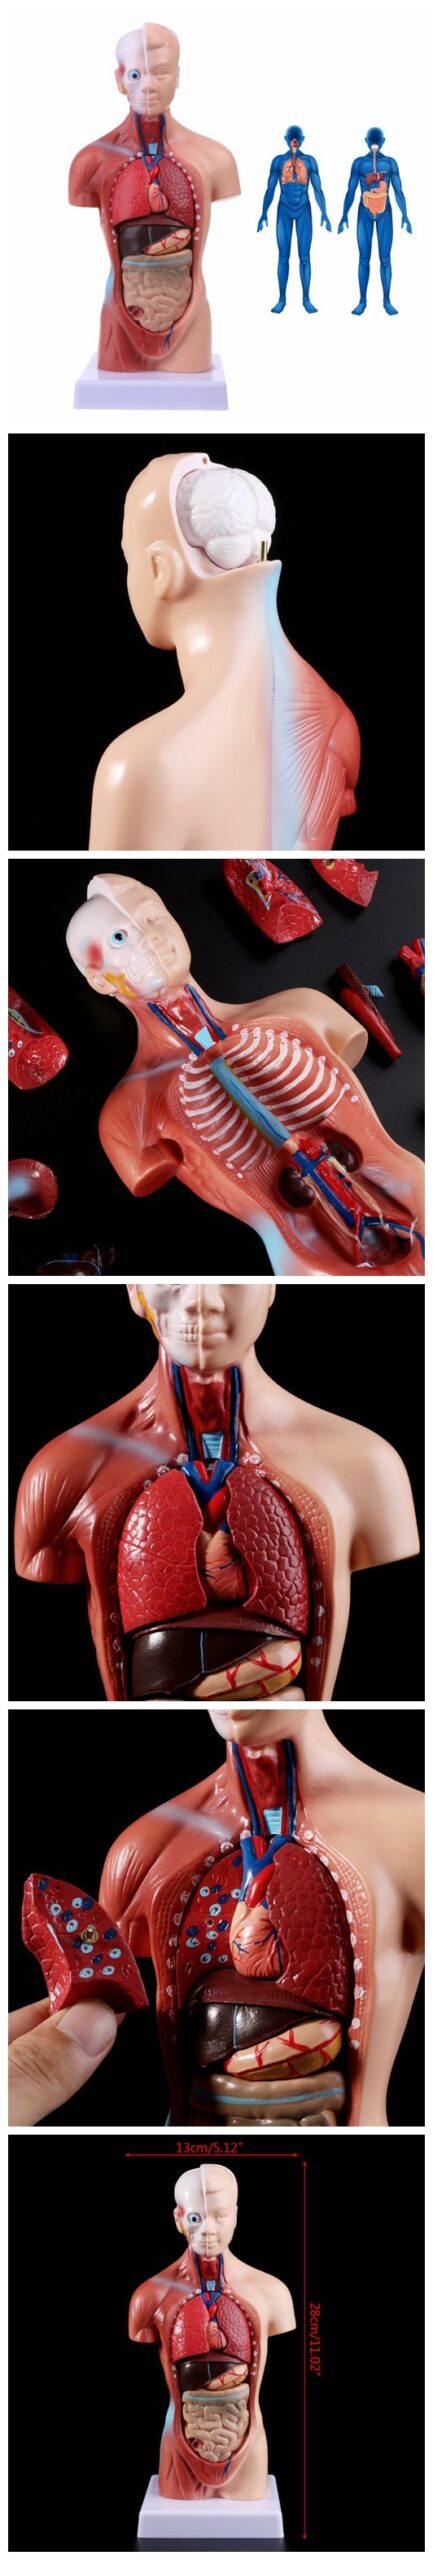 Medical props model Human Torso Body Model Anatomy Anatomical Medical Internal Organs For Teaching